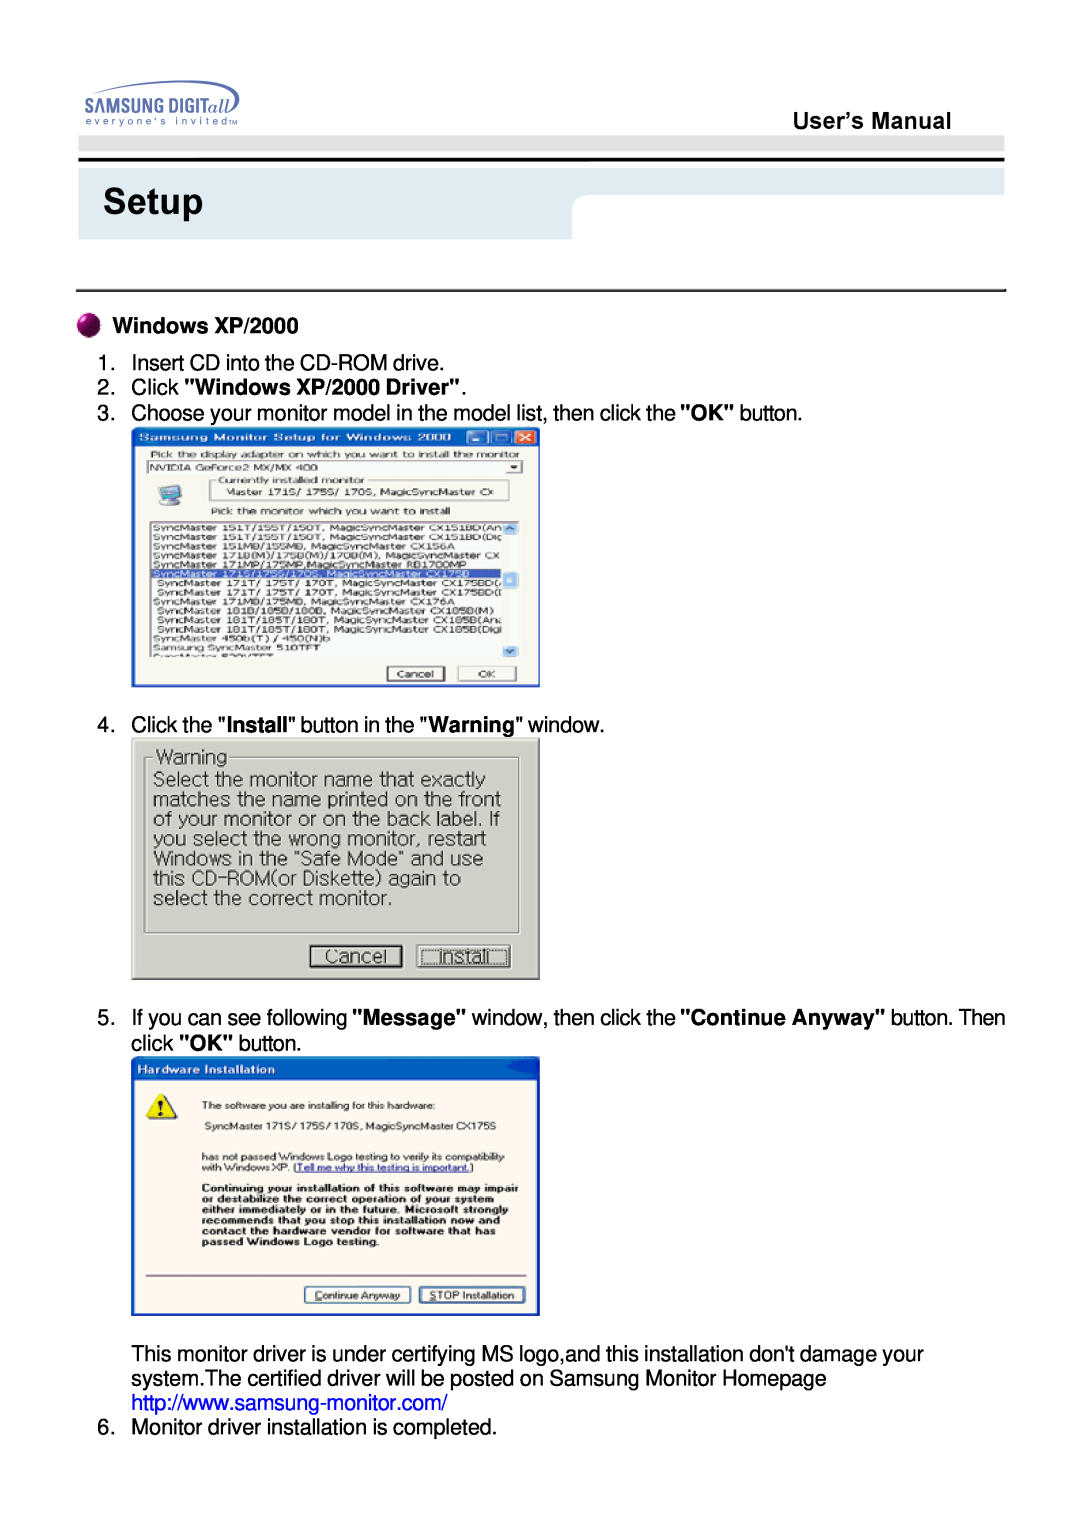 Samsung 171B, 171S, 181B, 171T, 171Q manual Setup, User’s Manual, Click Windows XP/2000 Driver 